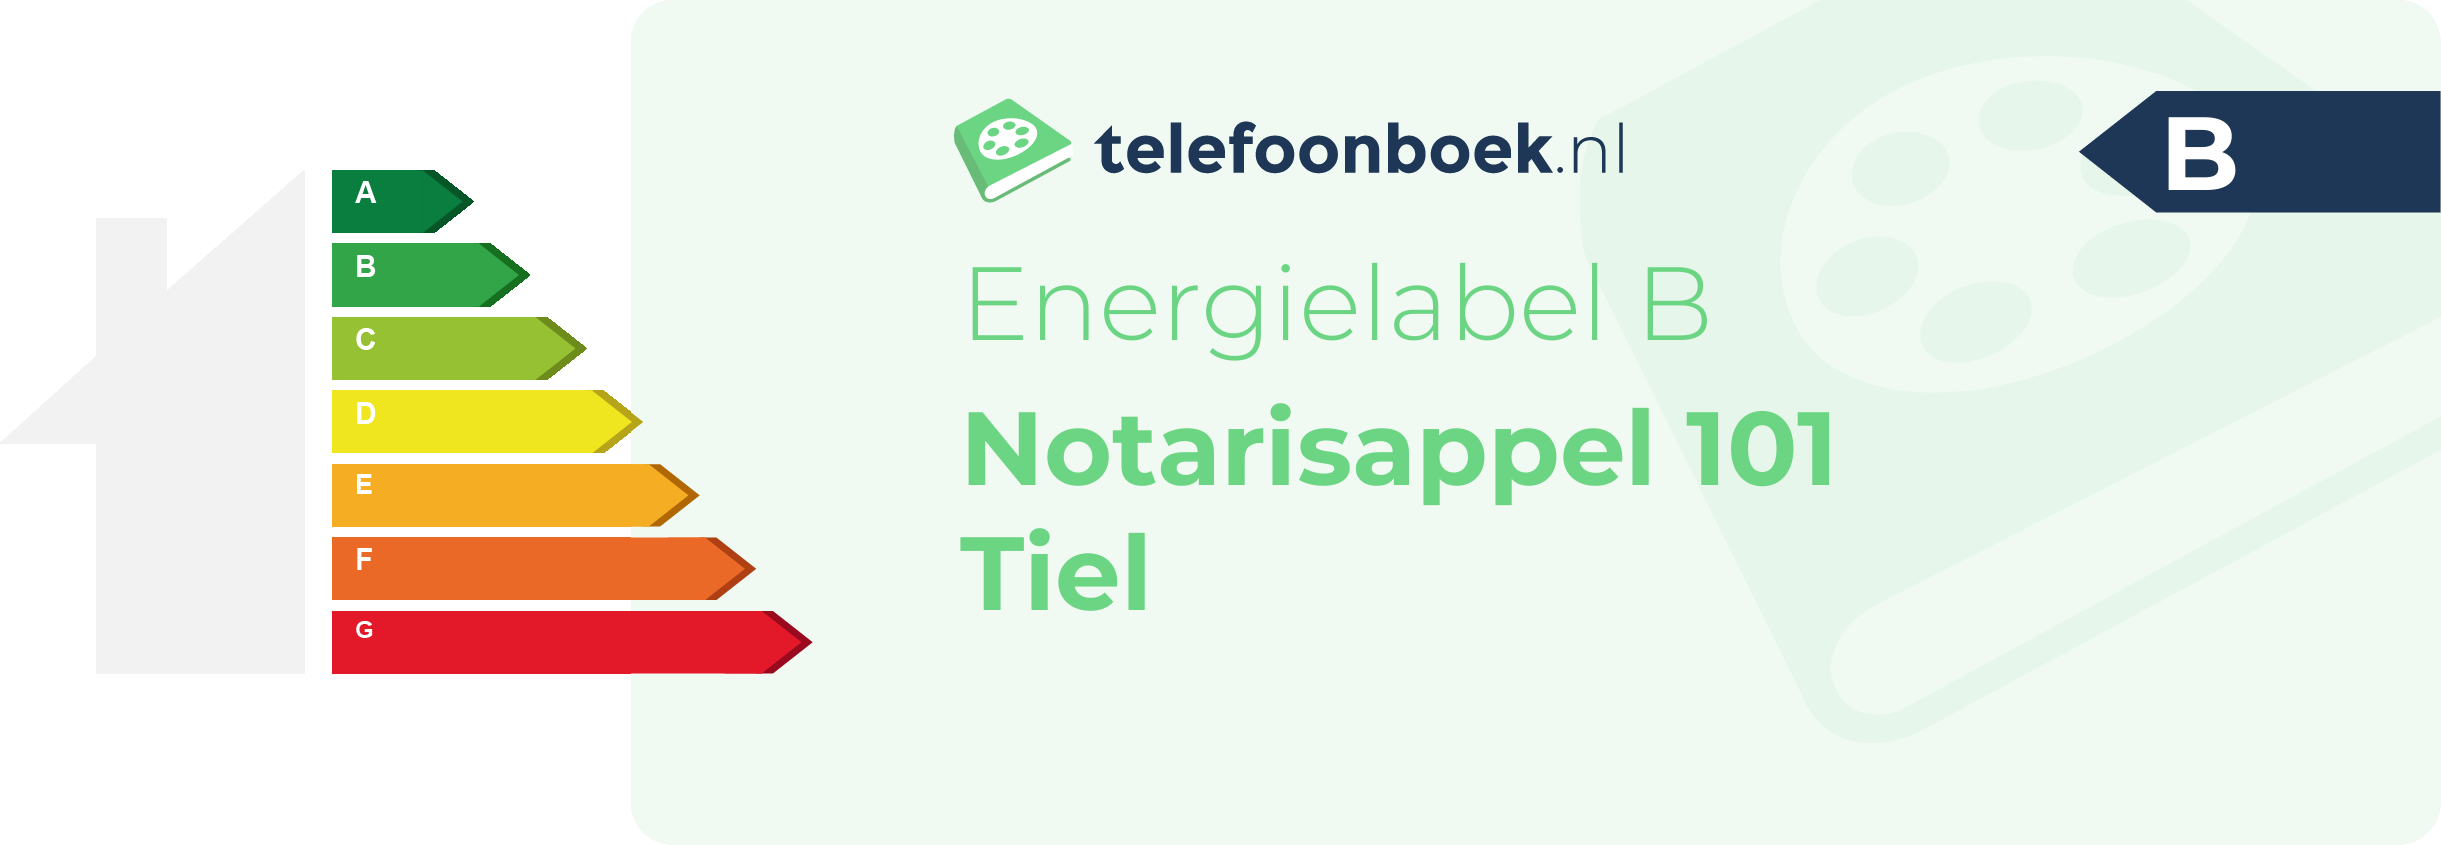 Energielabel Notarisappel 101 Tiel